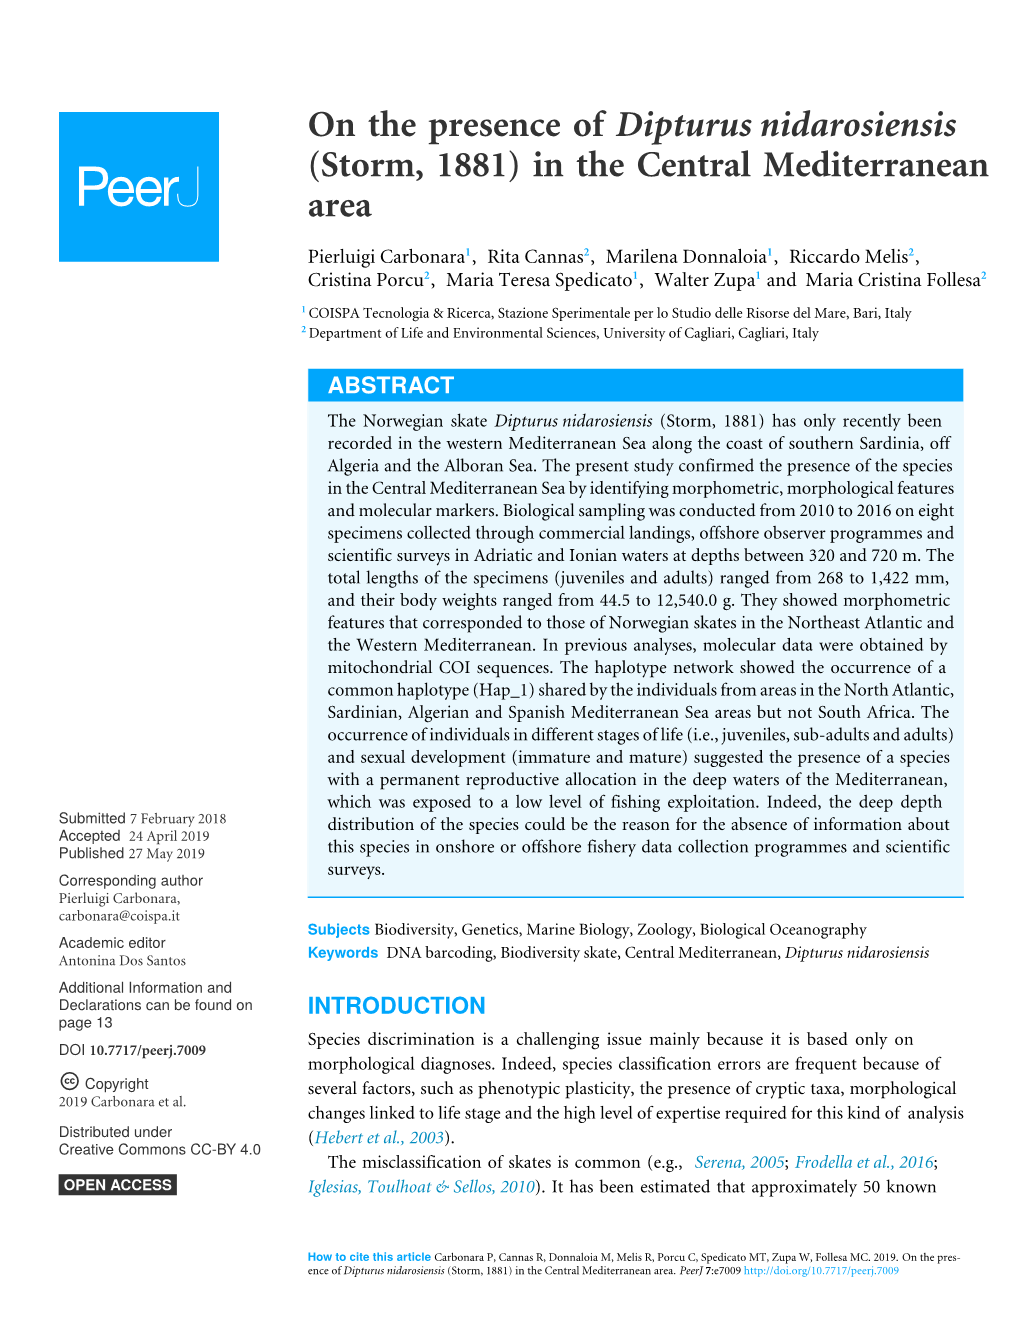 On the Presence of Dipturus Nidarosiensis (Storm, 1881) in the Central Mediterranean Area